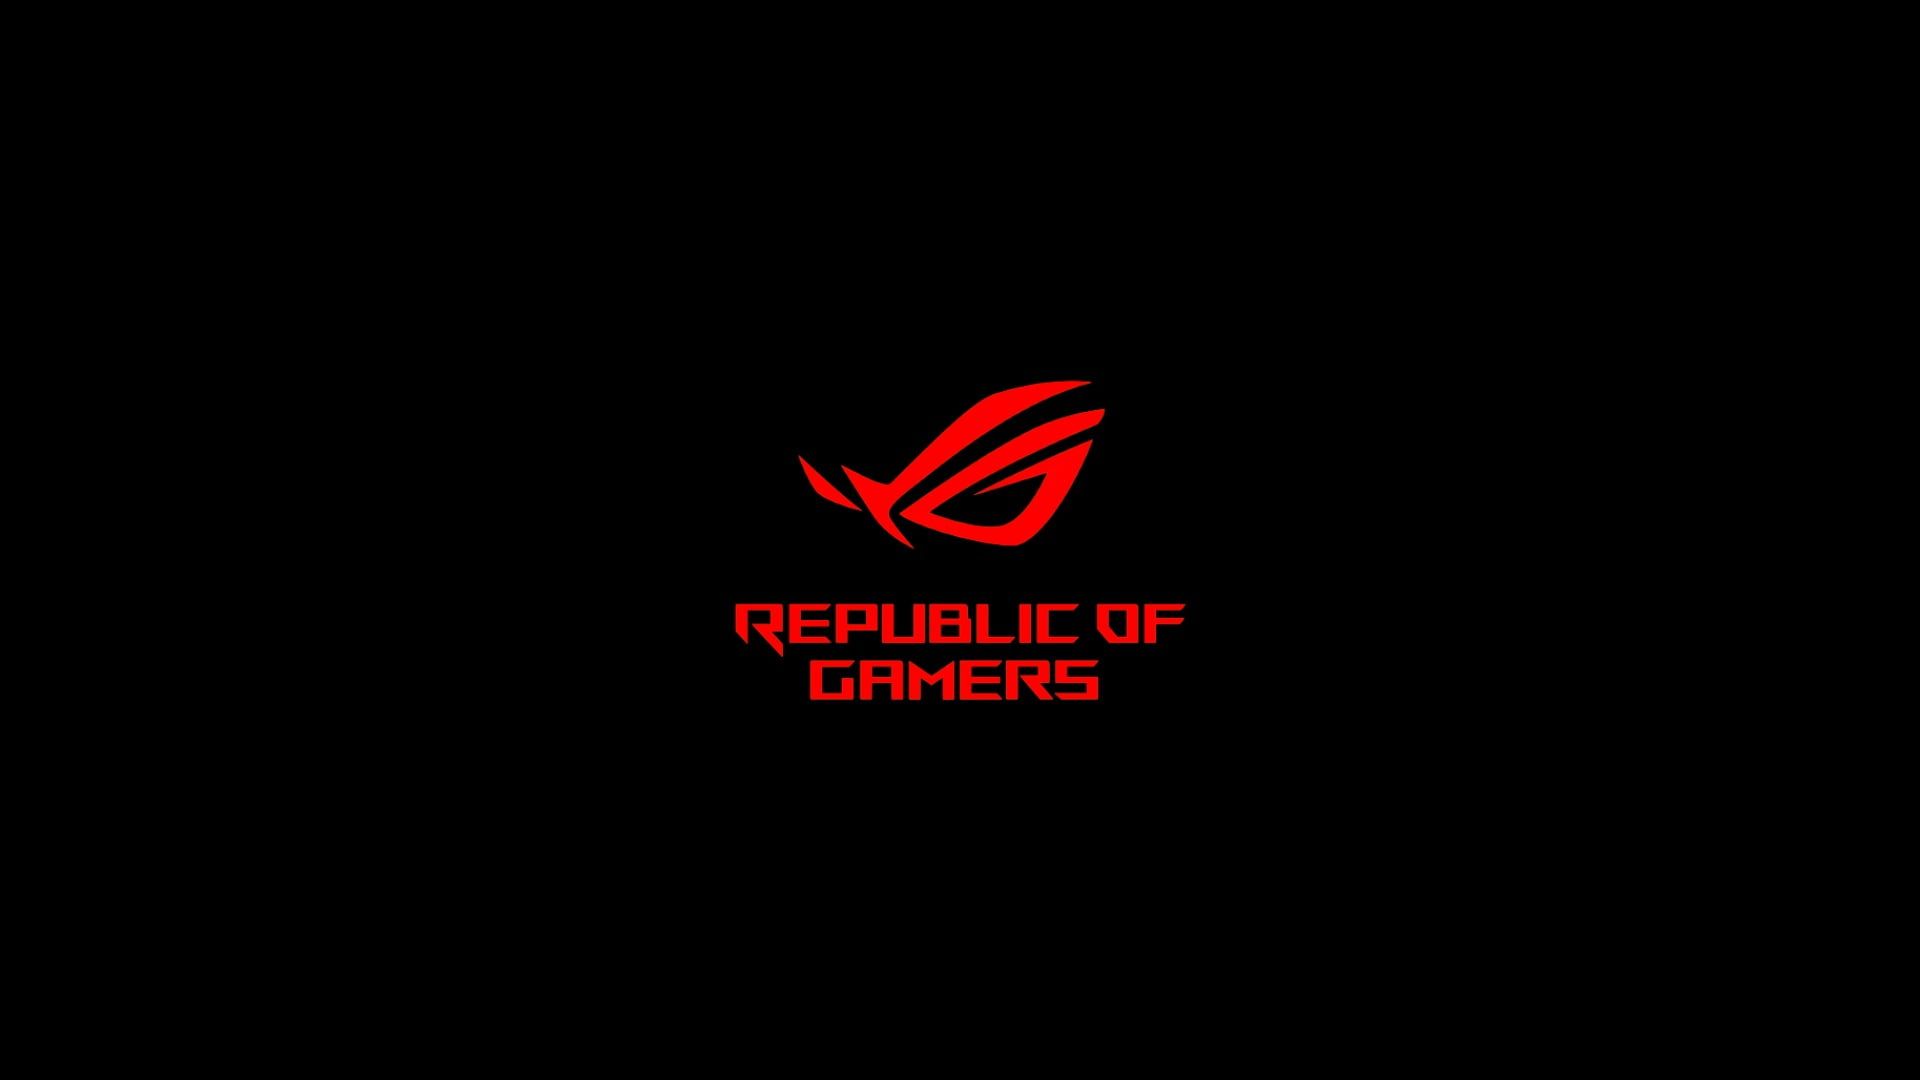 ASUS, Republic of Gamers, red, communication, illuminated, black background. Black background wallpaper, Gamer, Black background